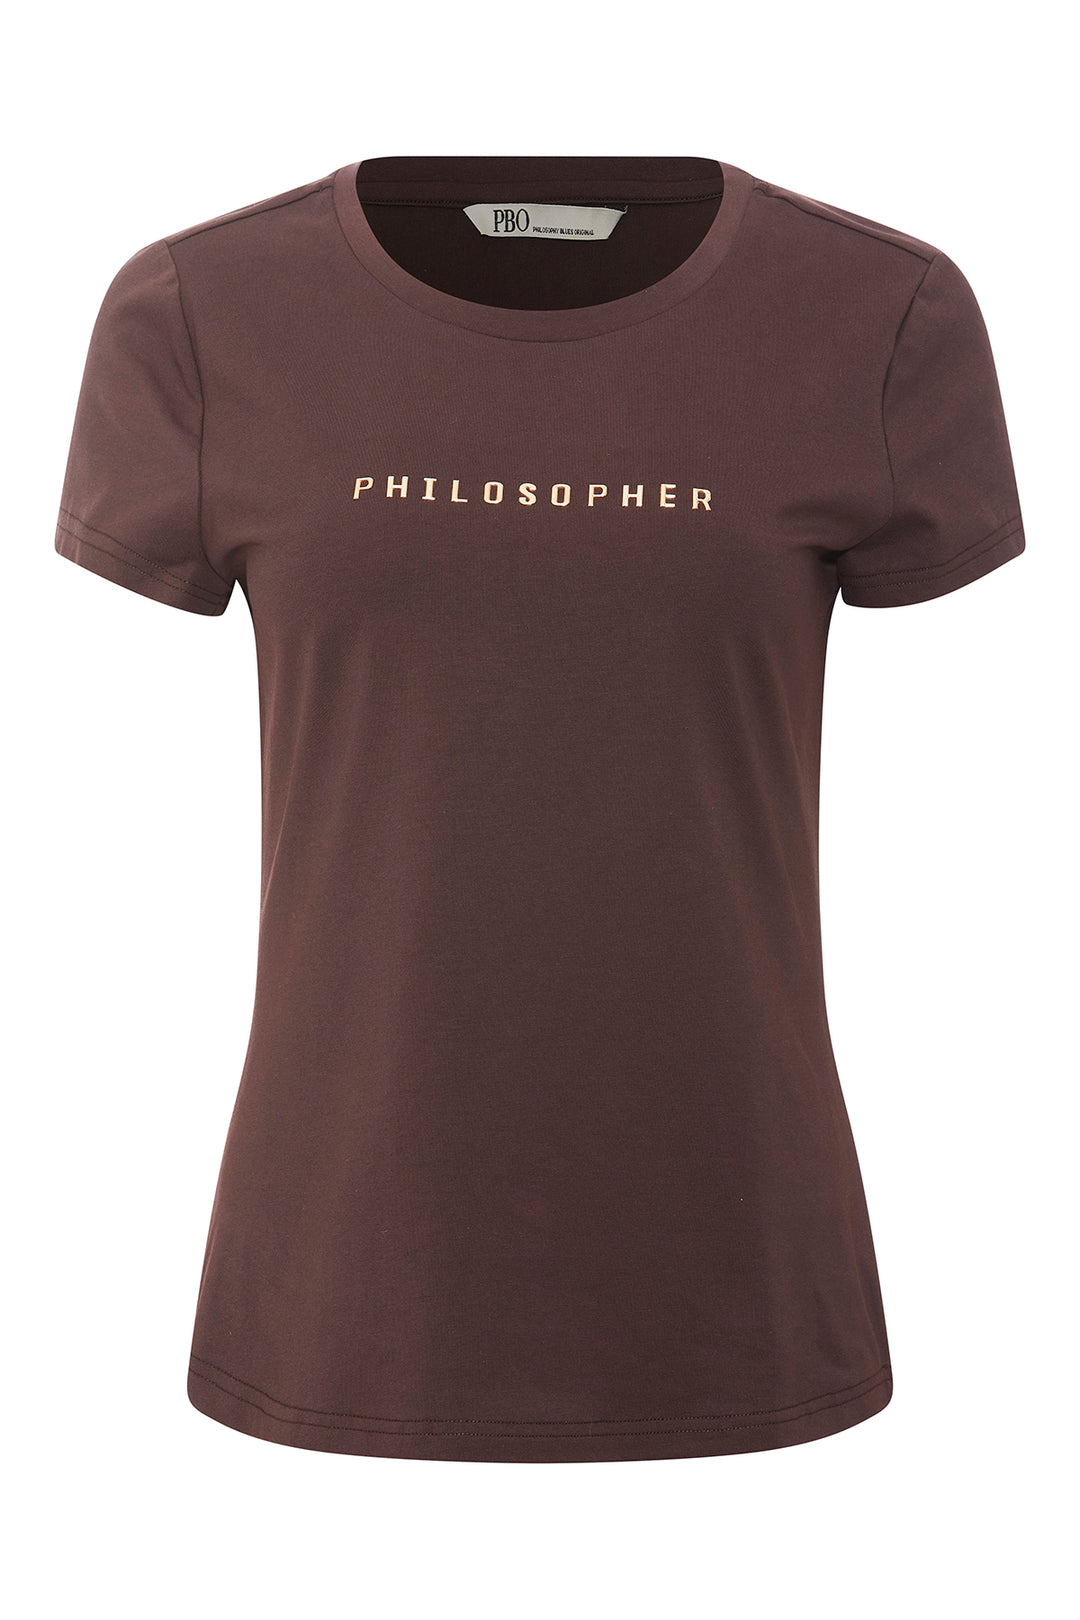 PBO Philosopher T-shirt T-SHIRTS 84 Wren